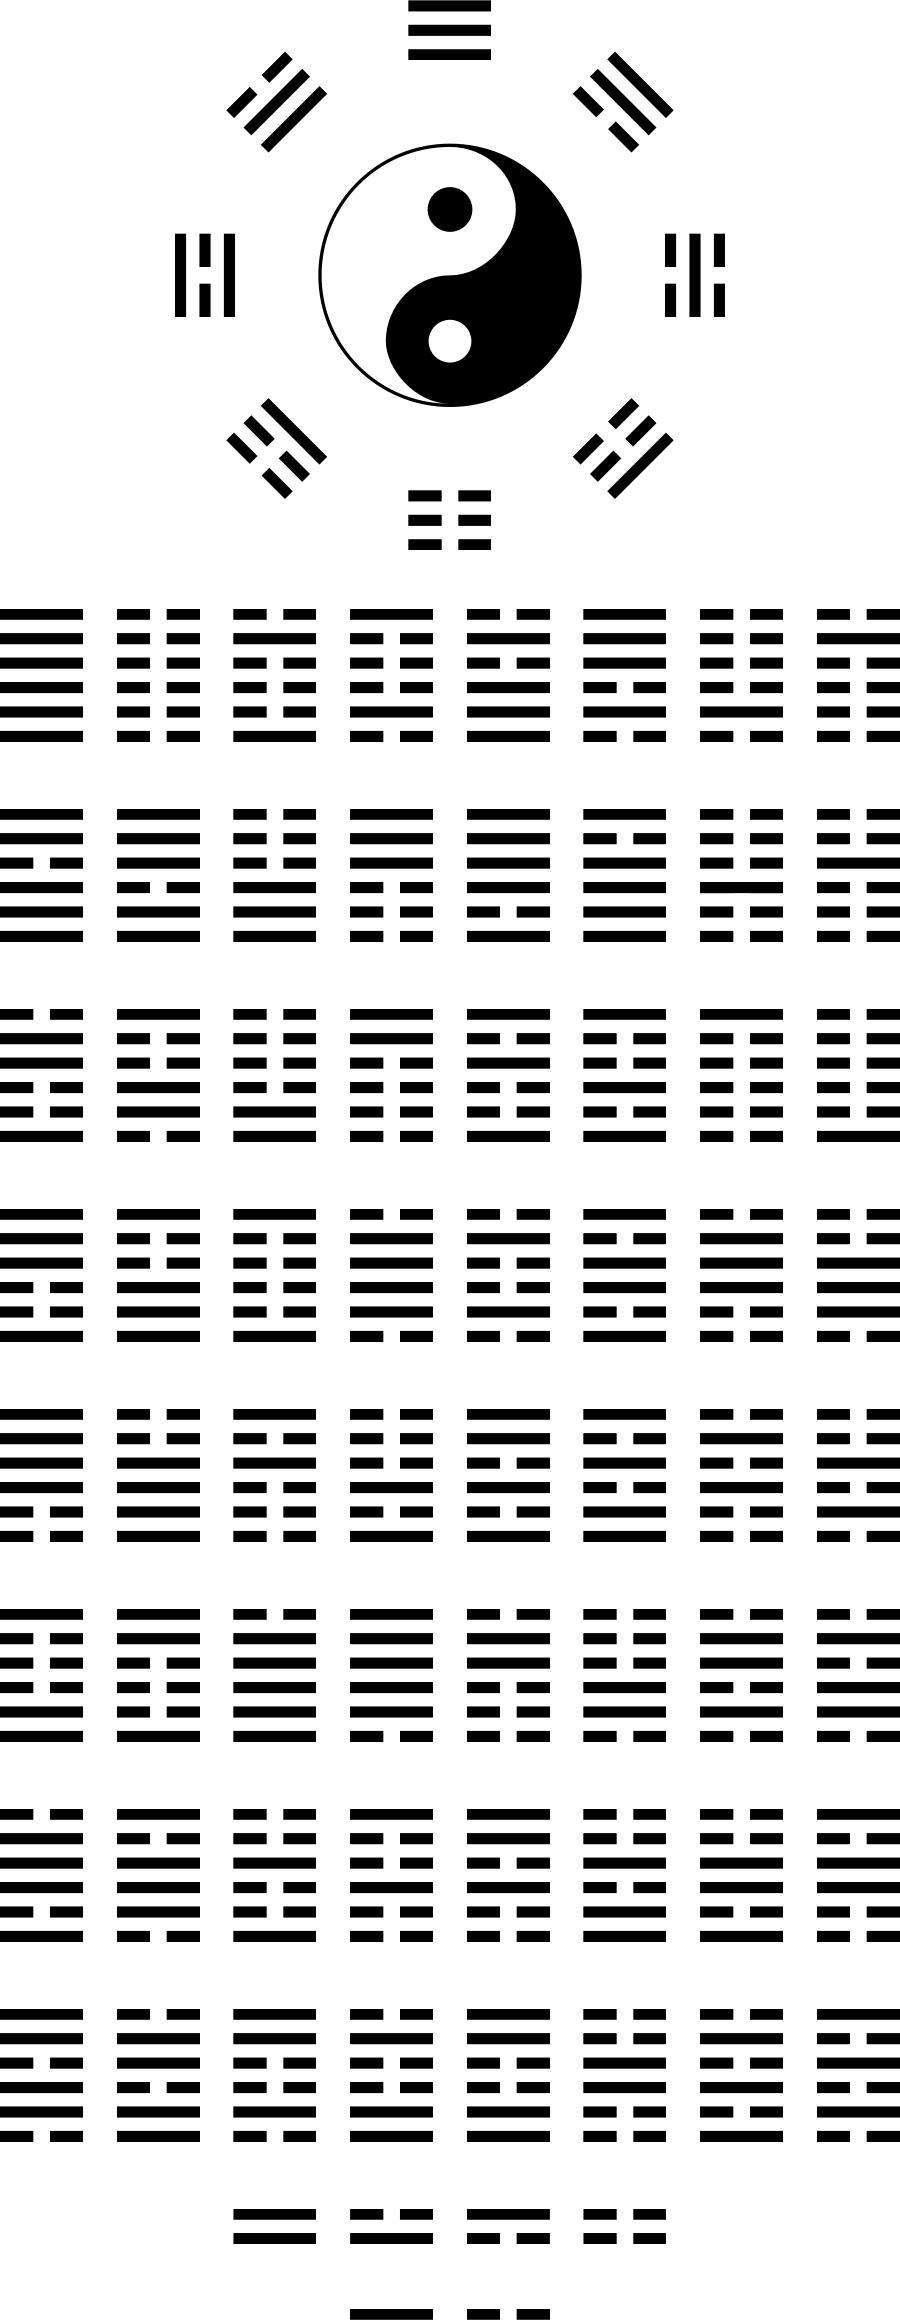 I Ching Symbols png transparent